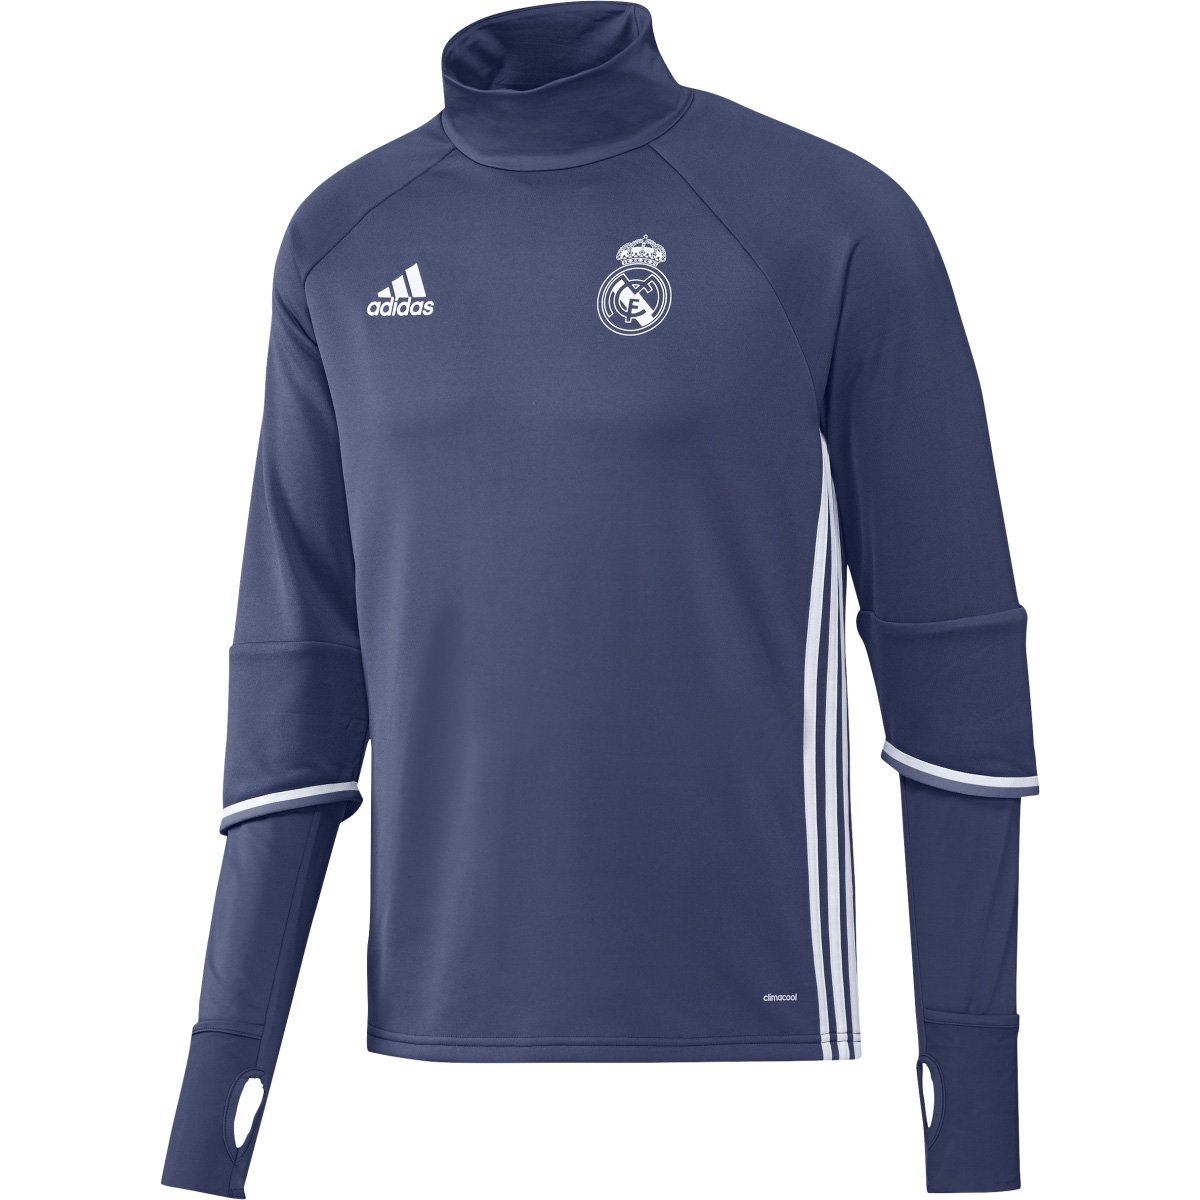 Playera Football Real Madrid Adidas - Caballero